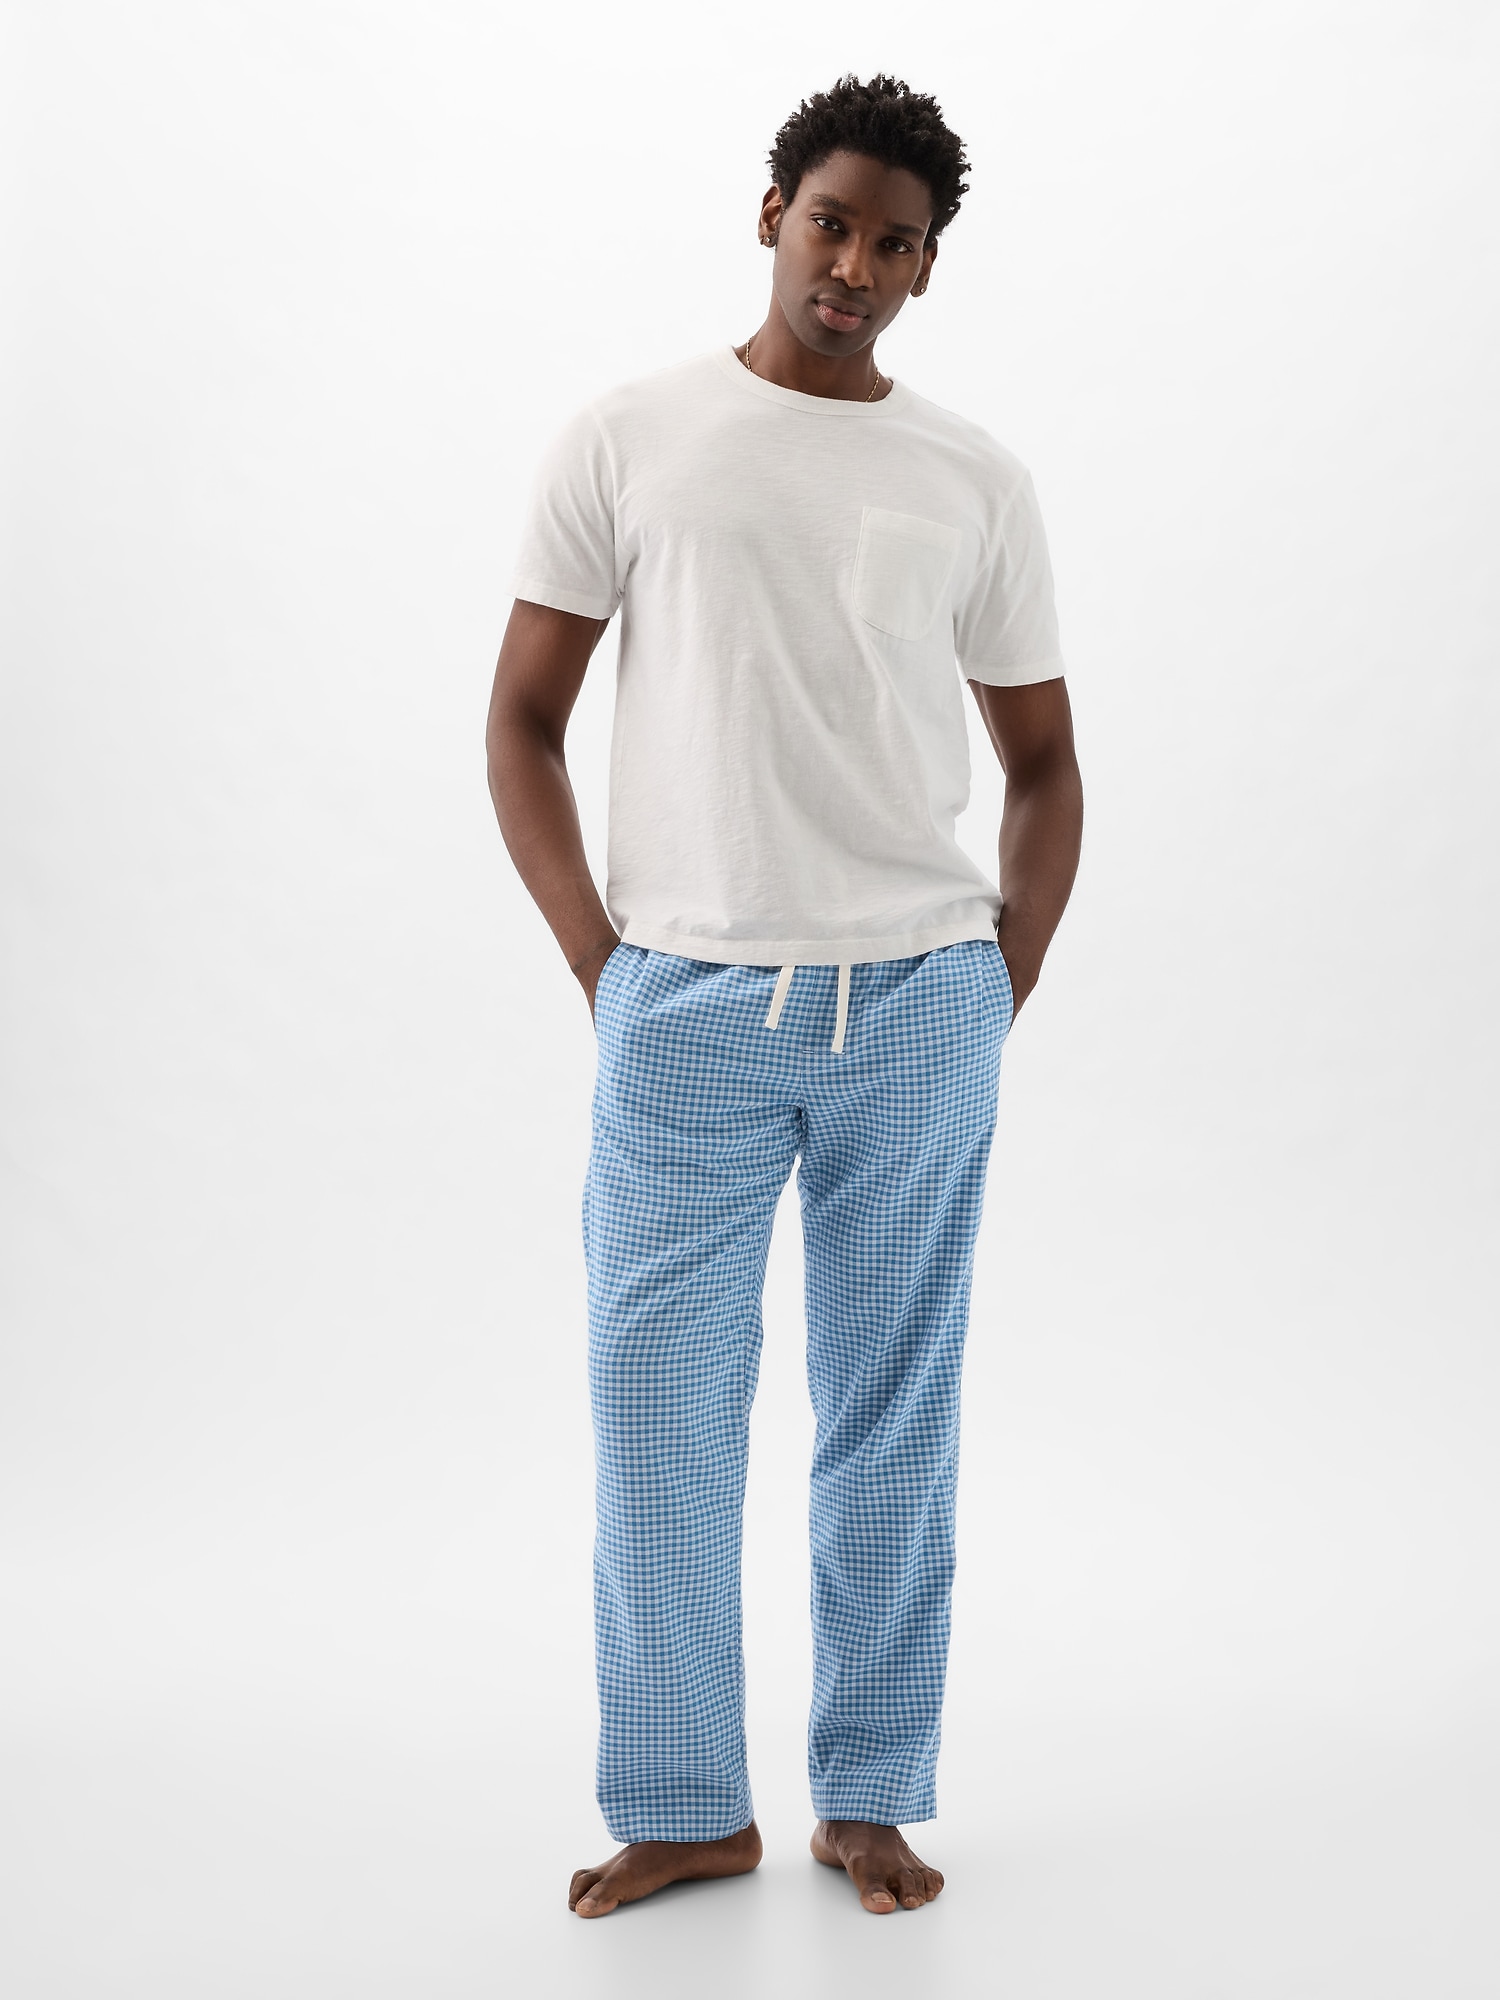 Mens Pajama Bottoms Plaid Pink Black White Pajama Pants for Men Lounge Pants  S at  Men's Clothing store